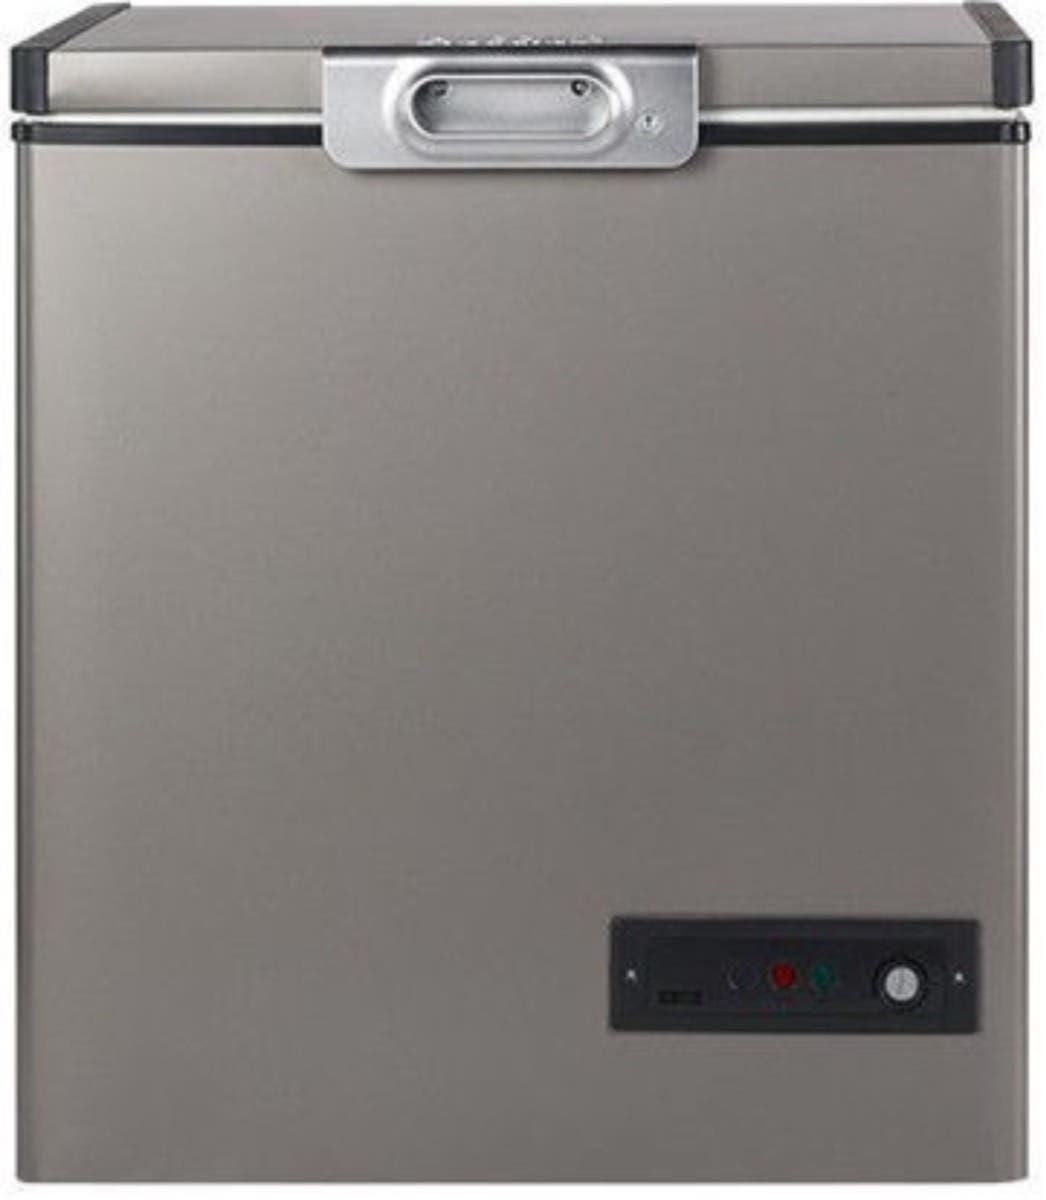 Get Passap ES241L Defrost Chest freezer, 203 Liter - Silver with best offers | Raneen.com